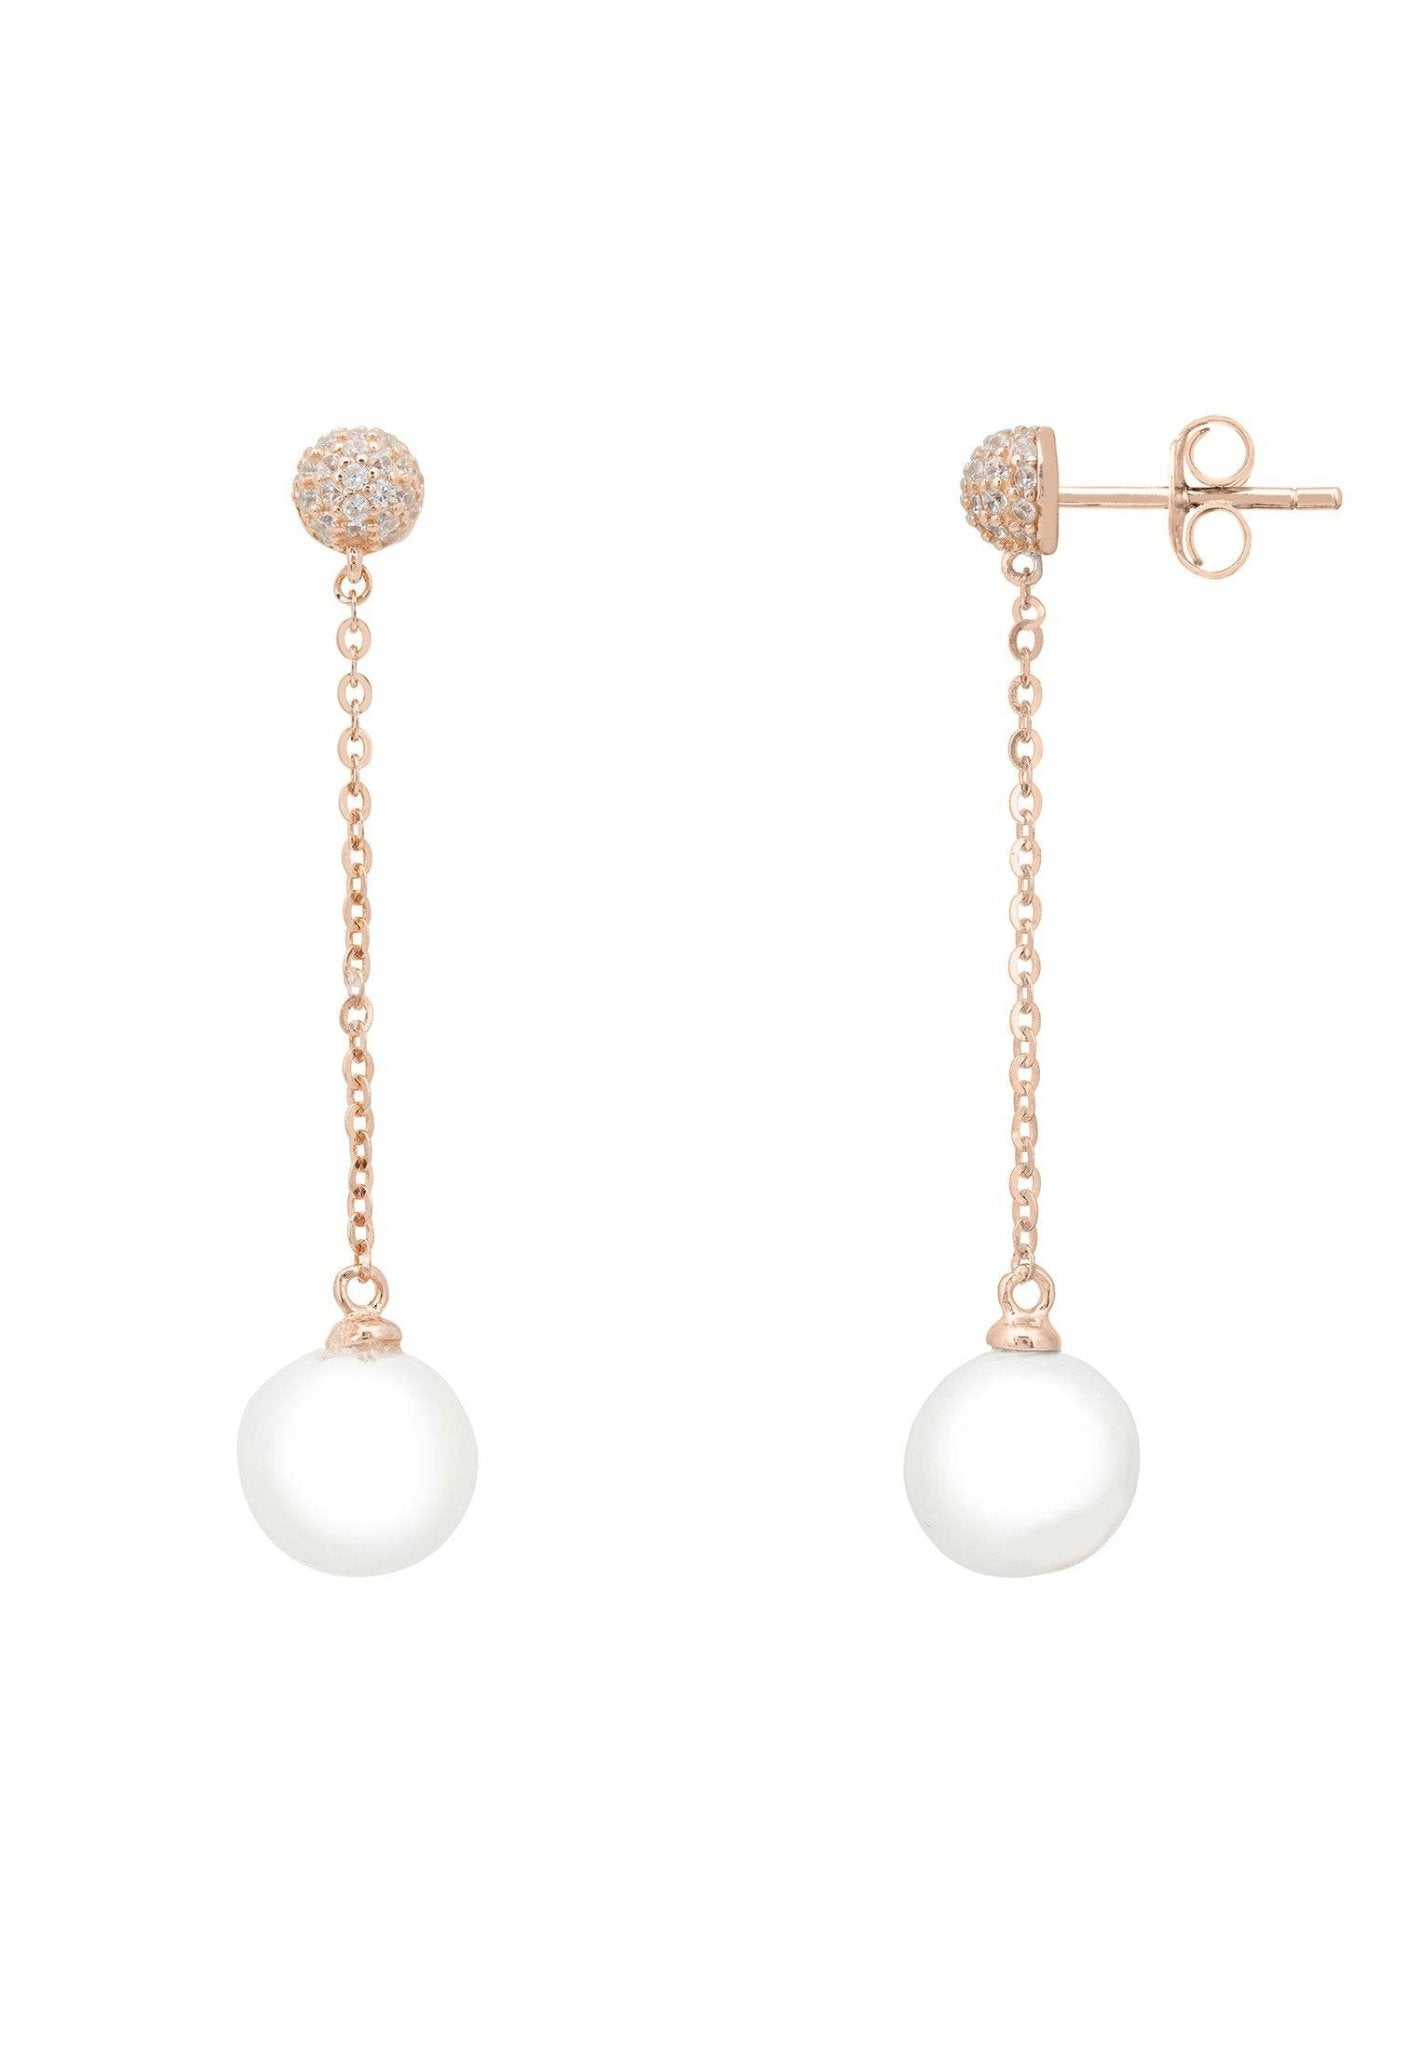 Ball Chain & Pearl Earrings Rosegold - LATELITA Earrings